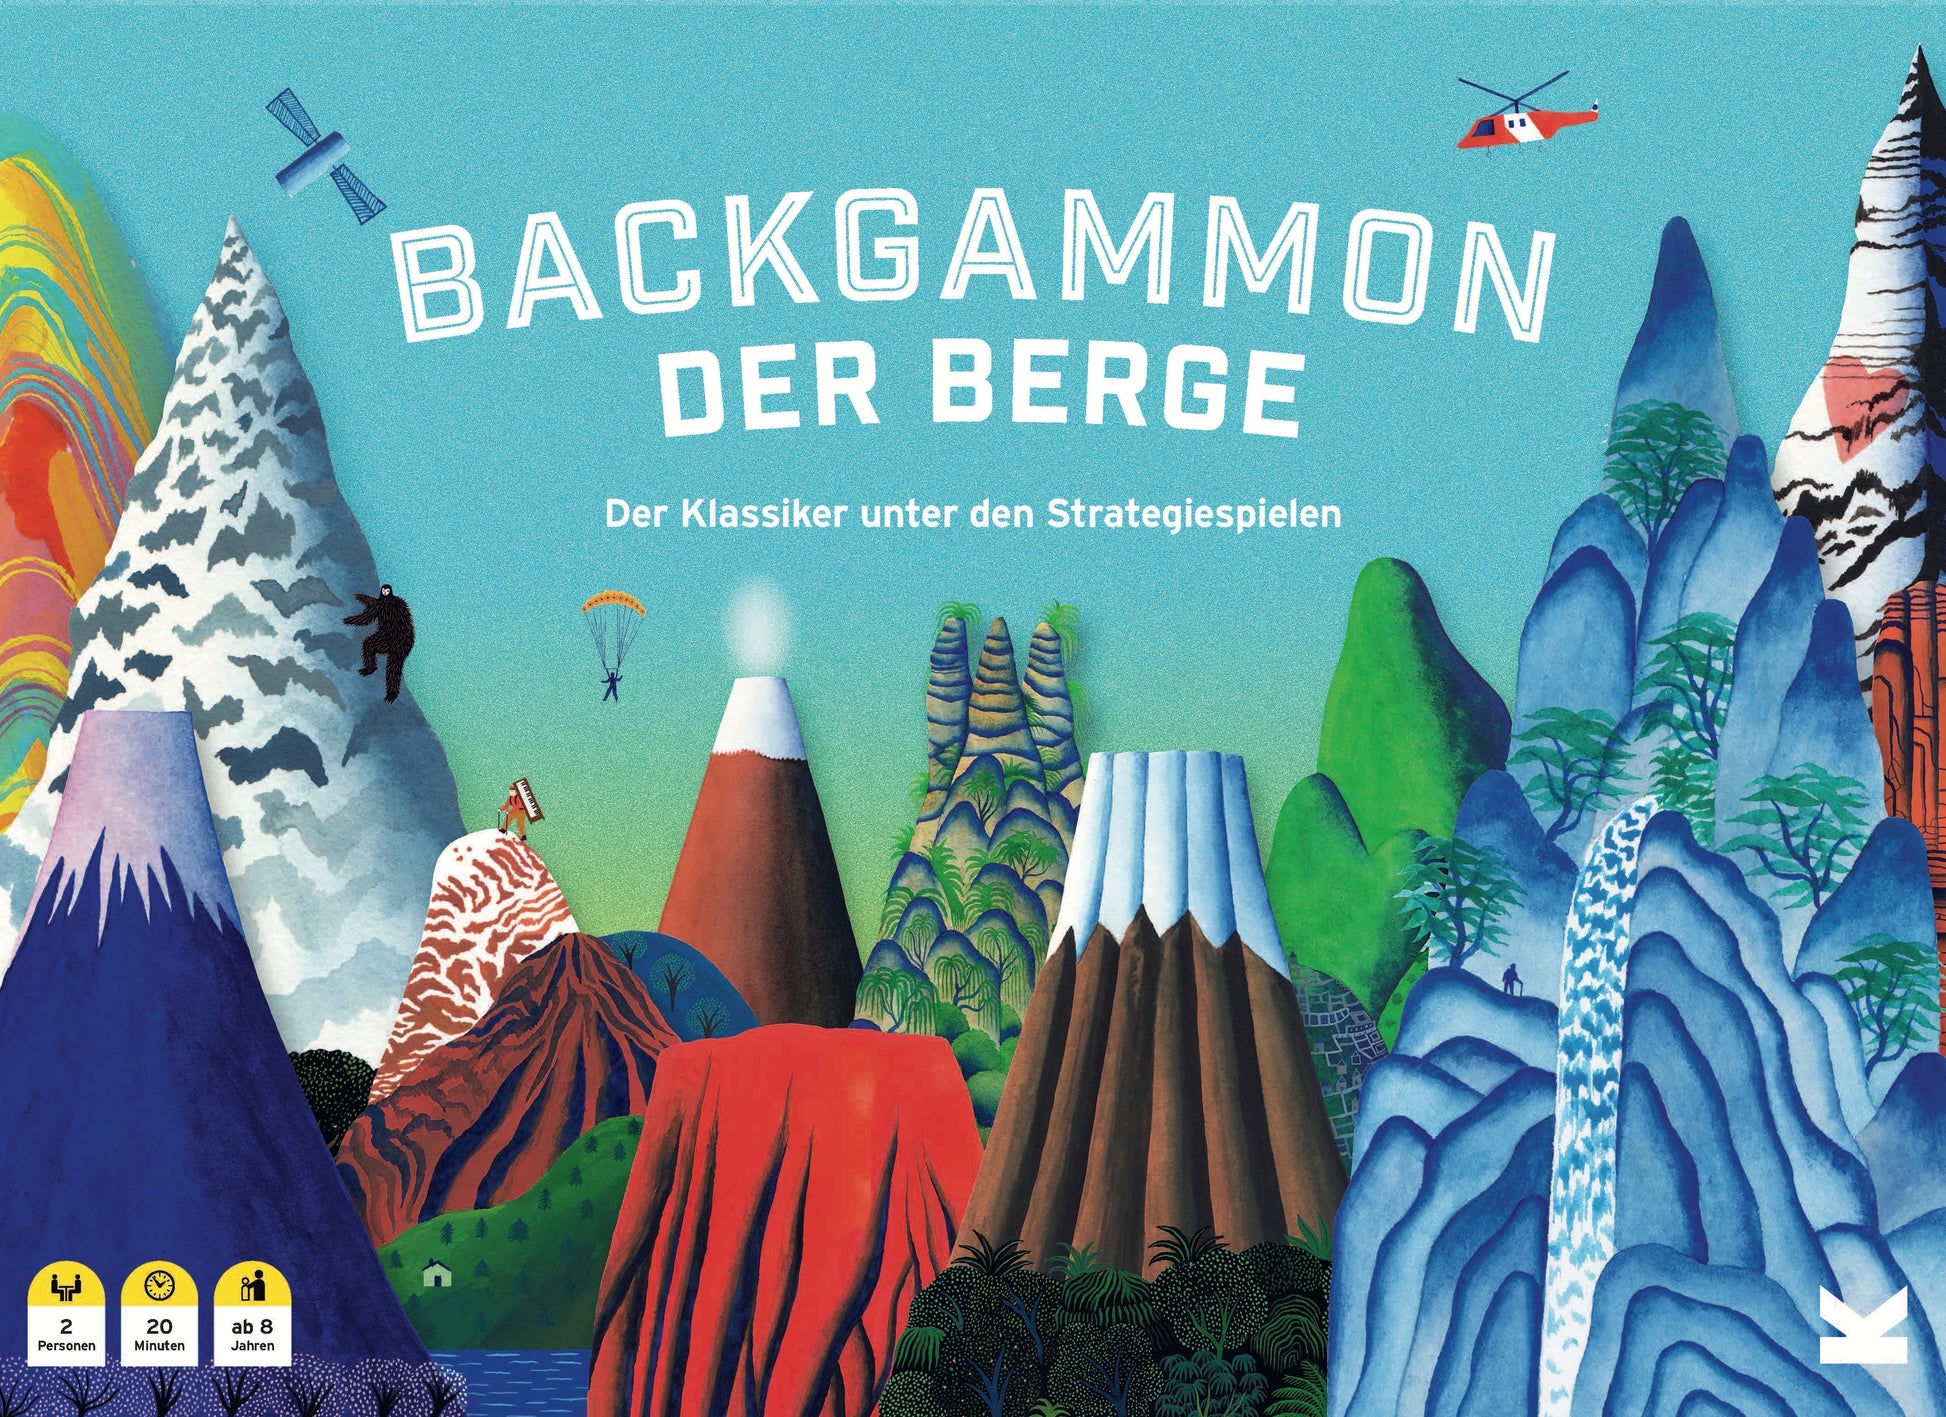 Backgammon der Berge by Lily Dyu, Jean Mallard, Ulrich Korn